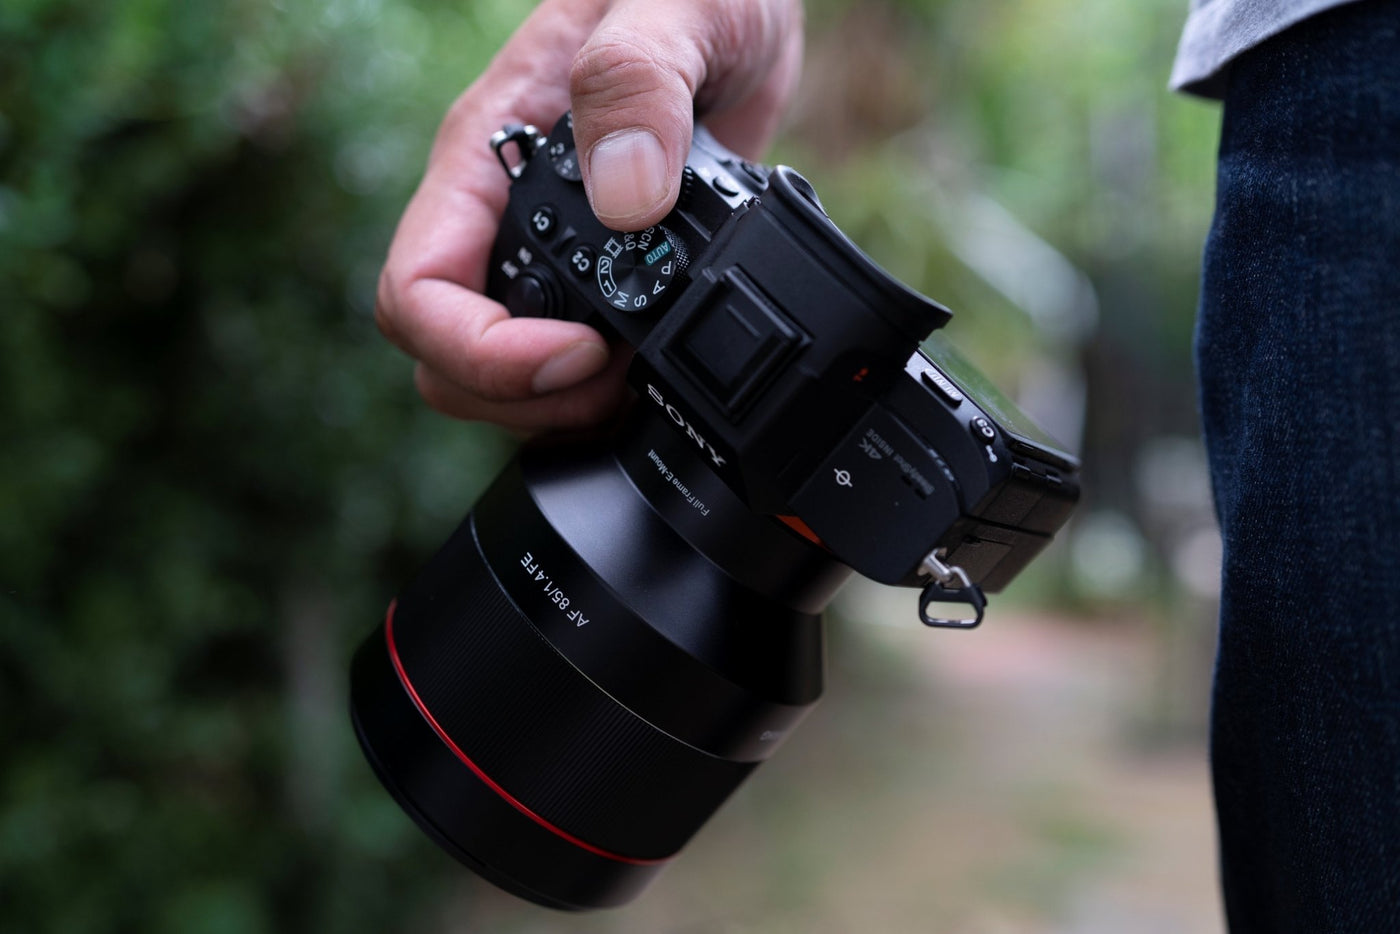 85mm F1.4 AF Full Frame Telephoto (Sony E) - Rokinon Lenses - IO85AF-E